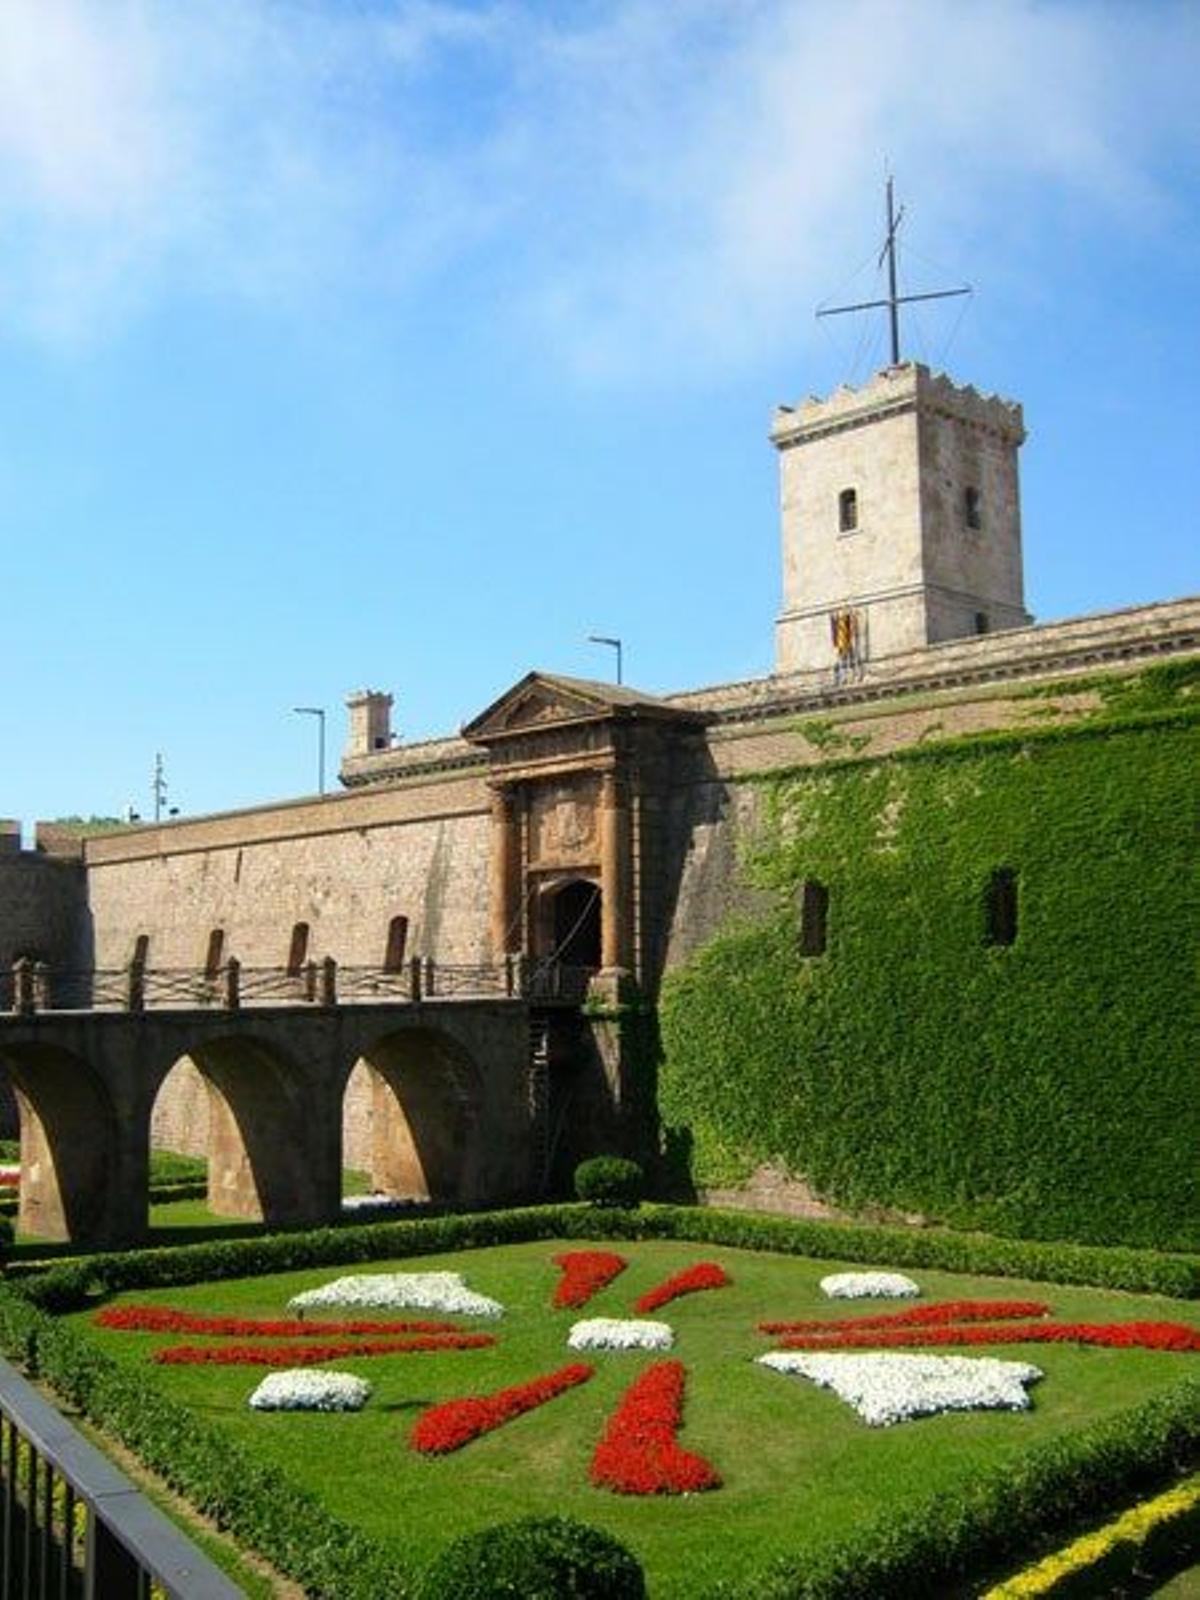 El Castillo de Montjuic es una antigua fortaleza militar del siglo XVIII.